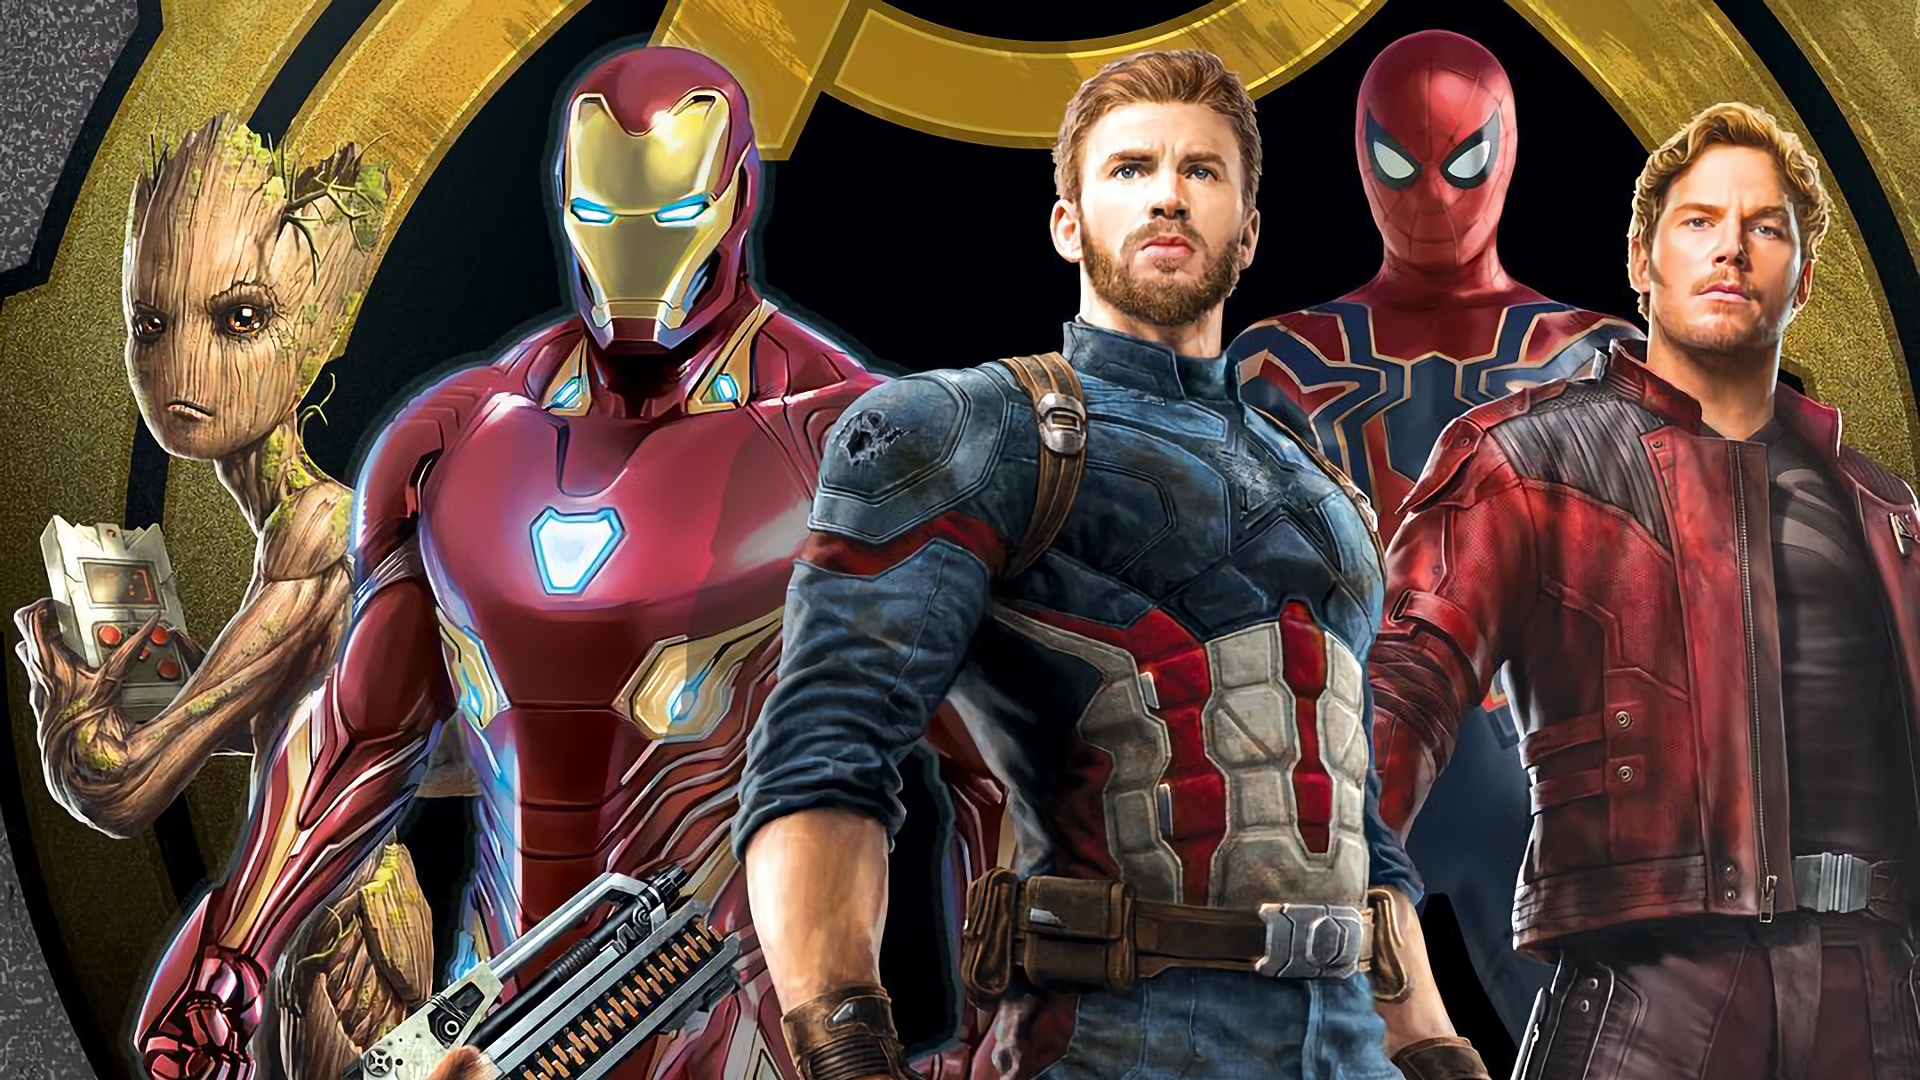 download Avengers: Infinity War free